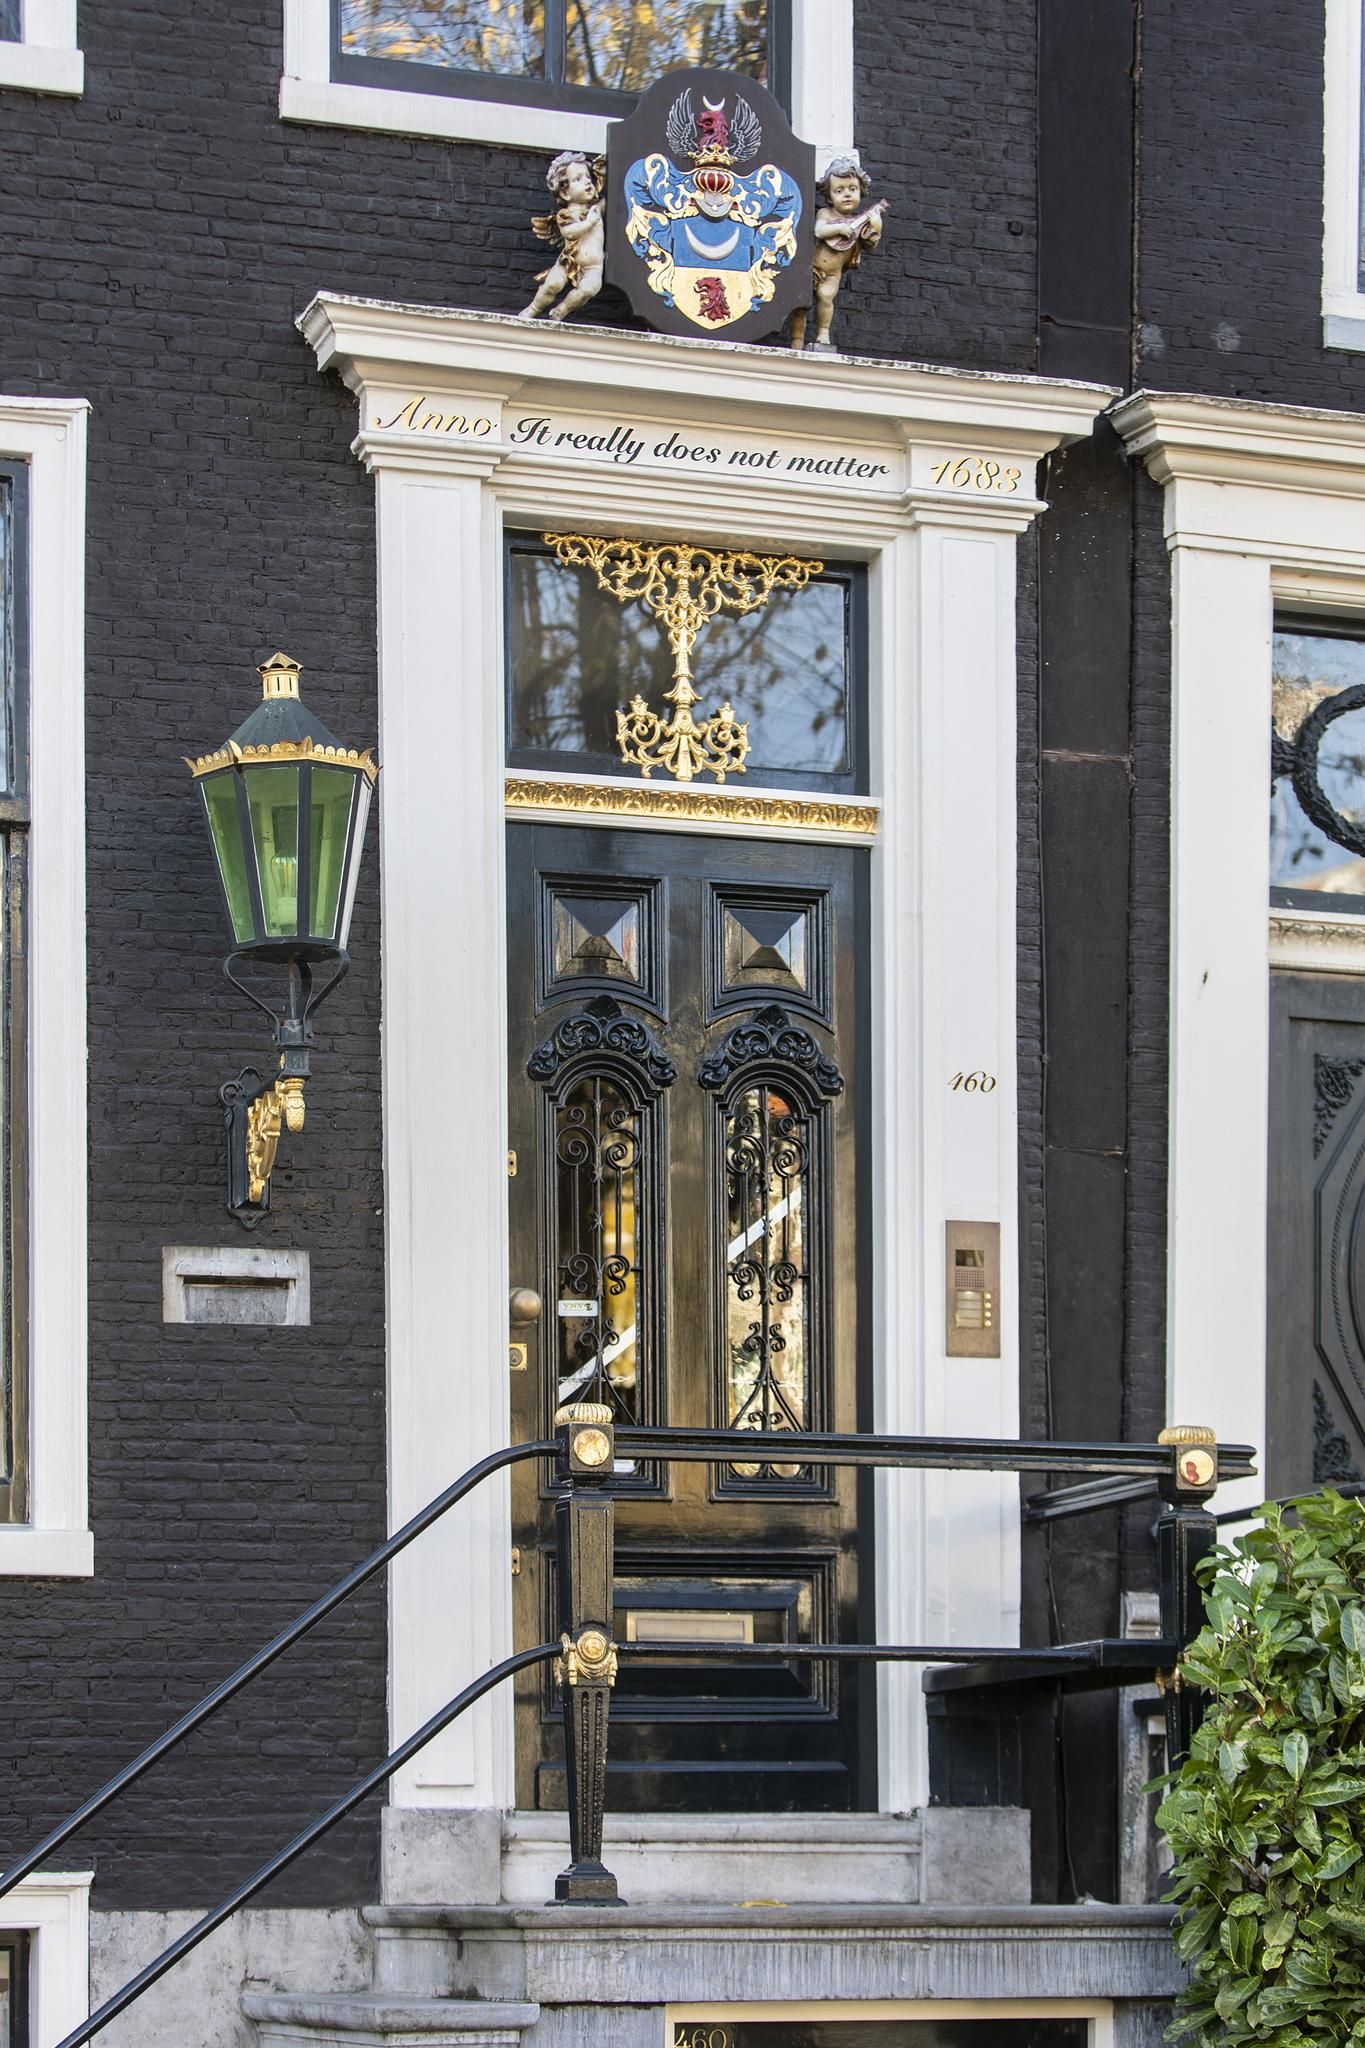 Keizersgracht 460 - Amsterdam